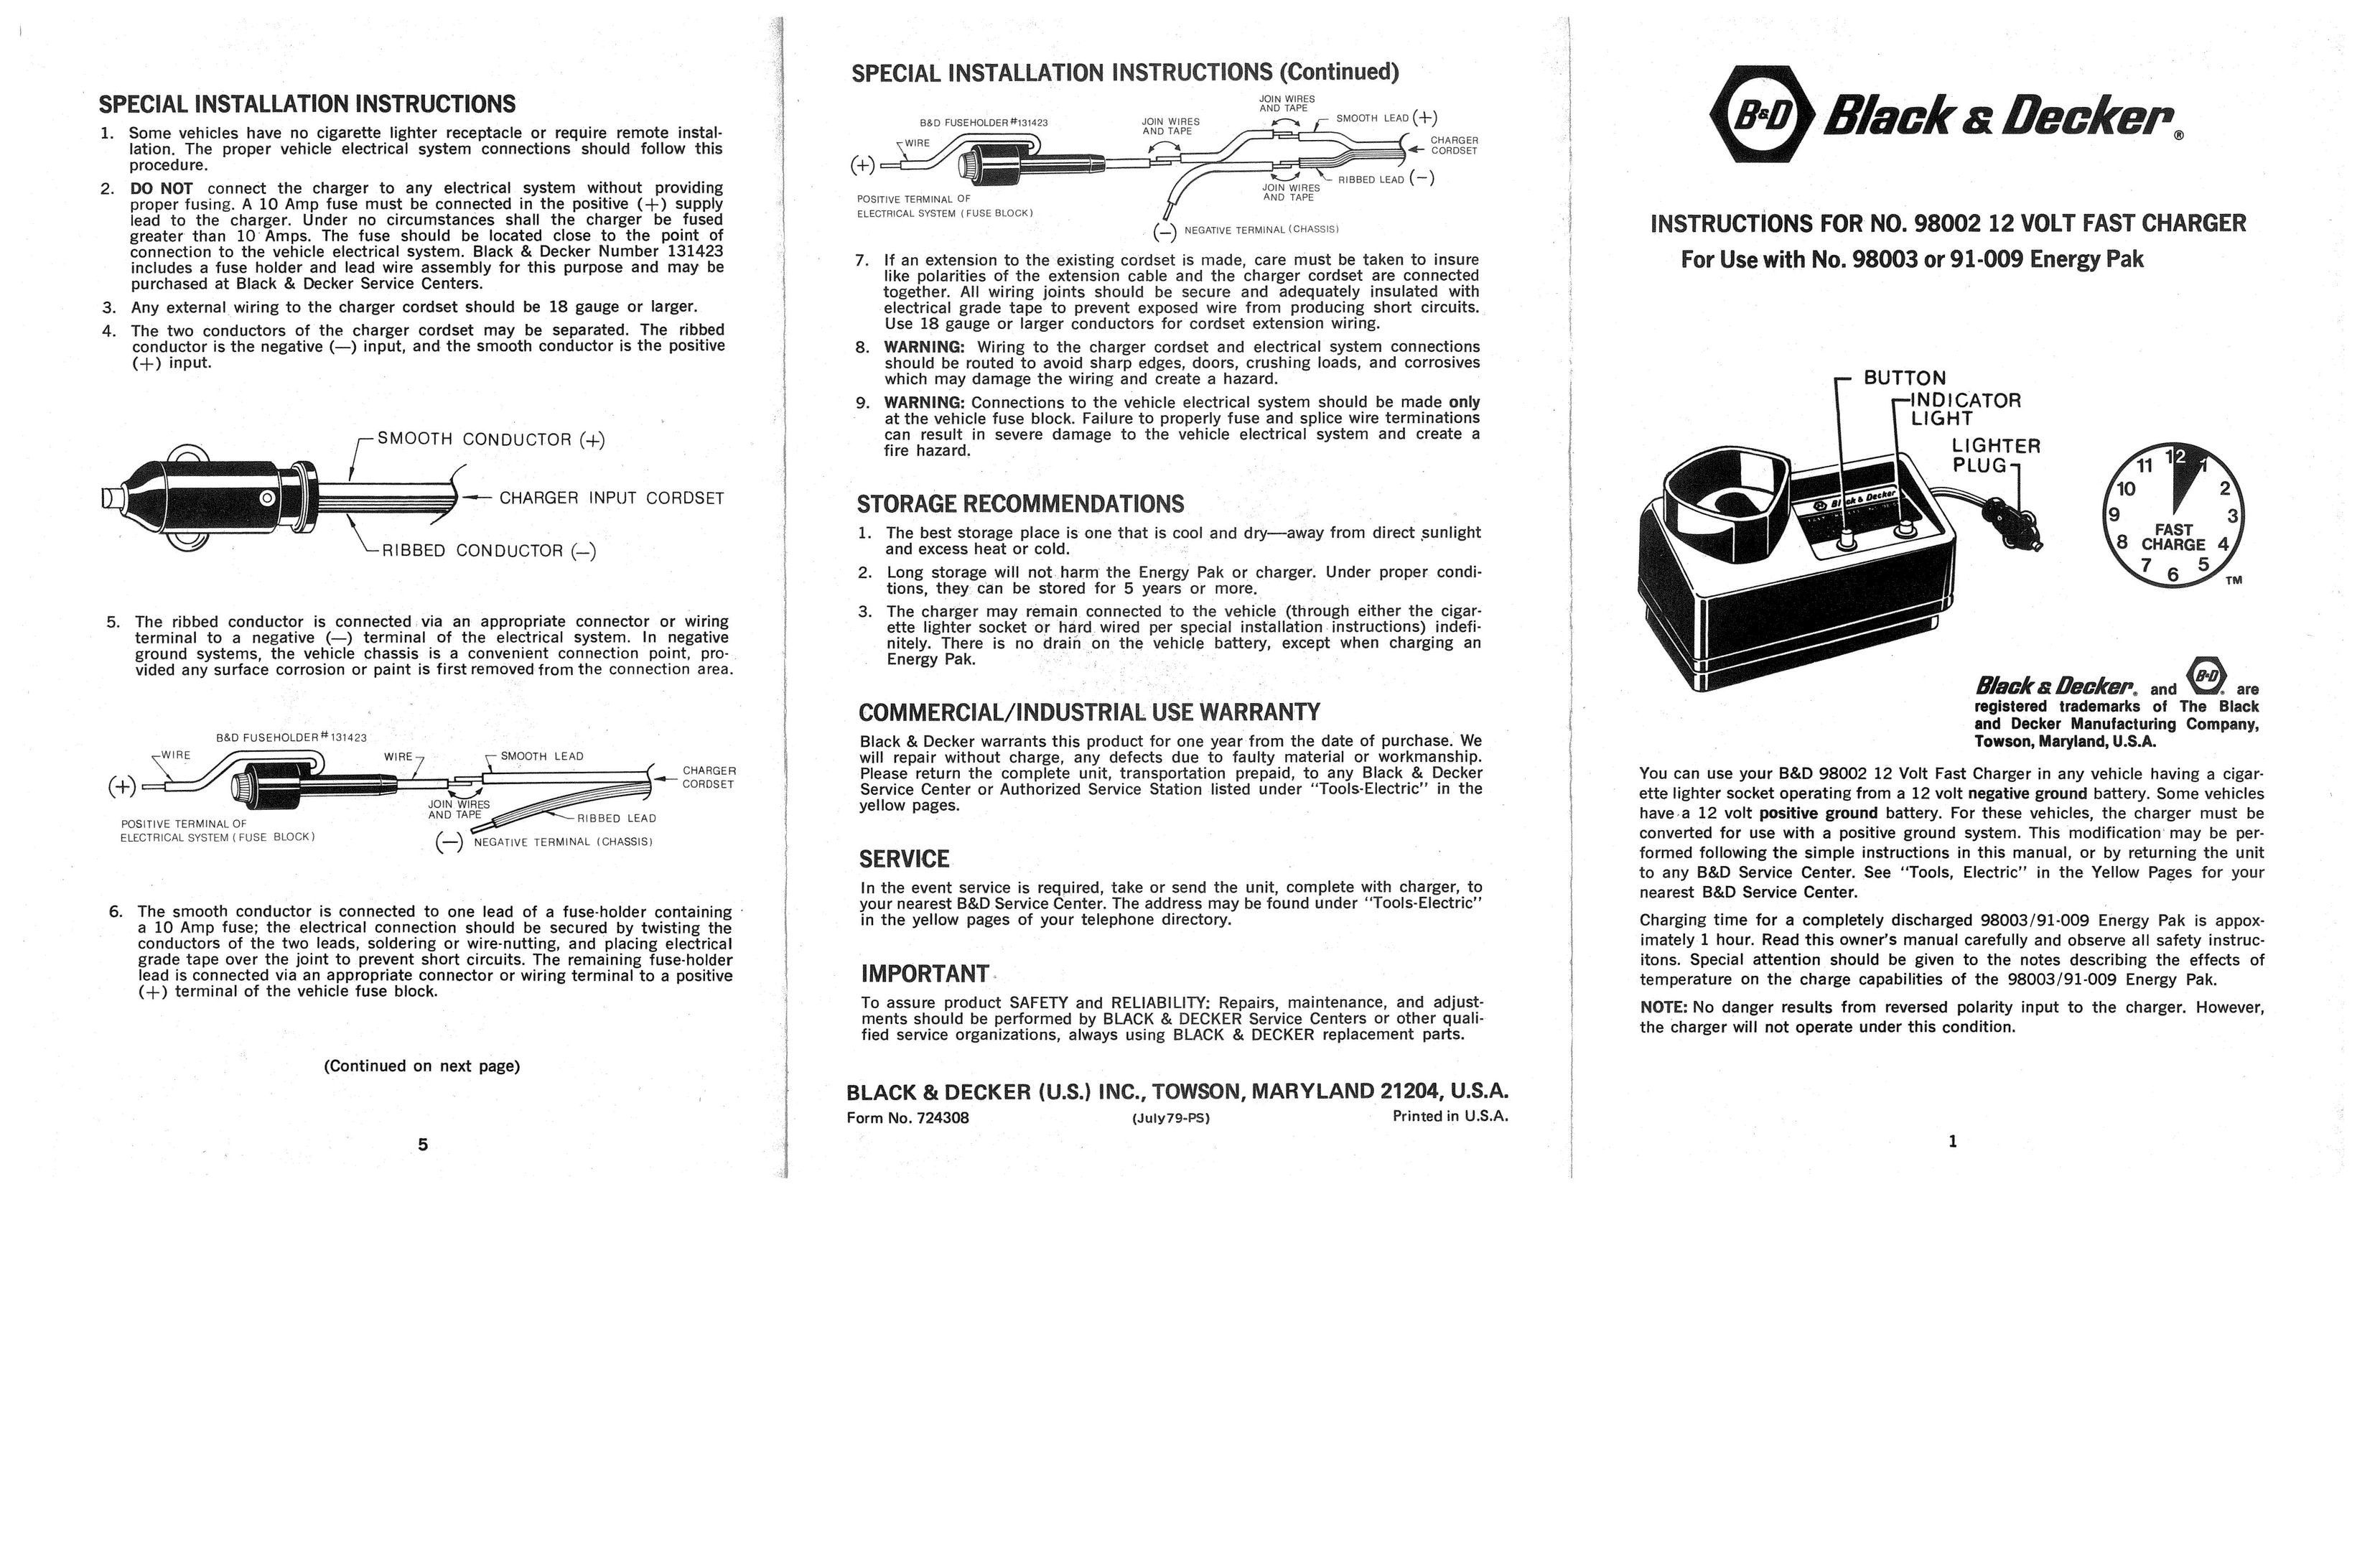 Black & Decker 724308 Battery Charger User Manual